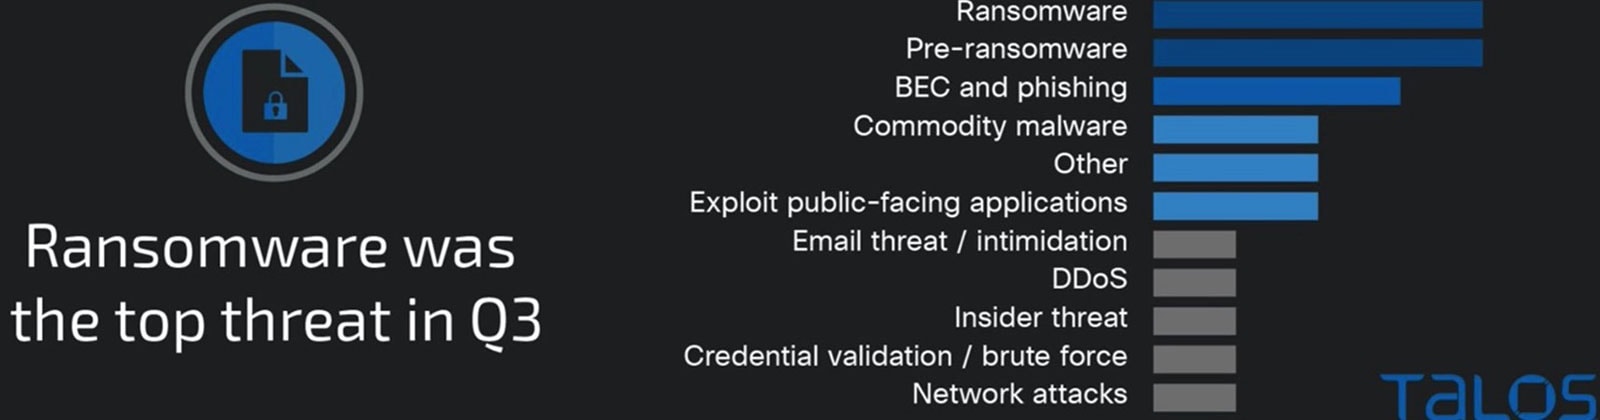 ransomware-threat